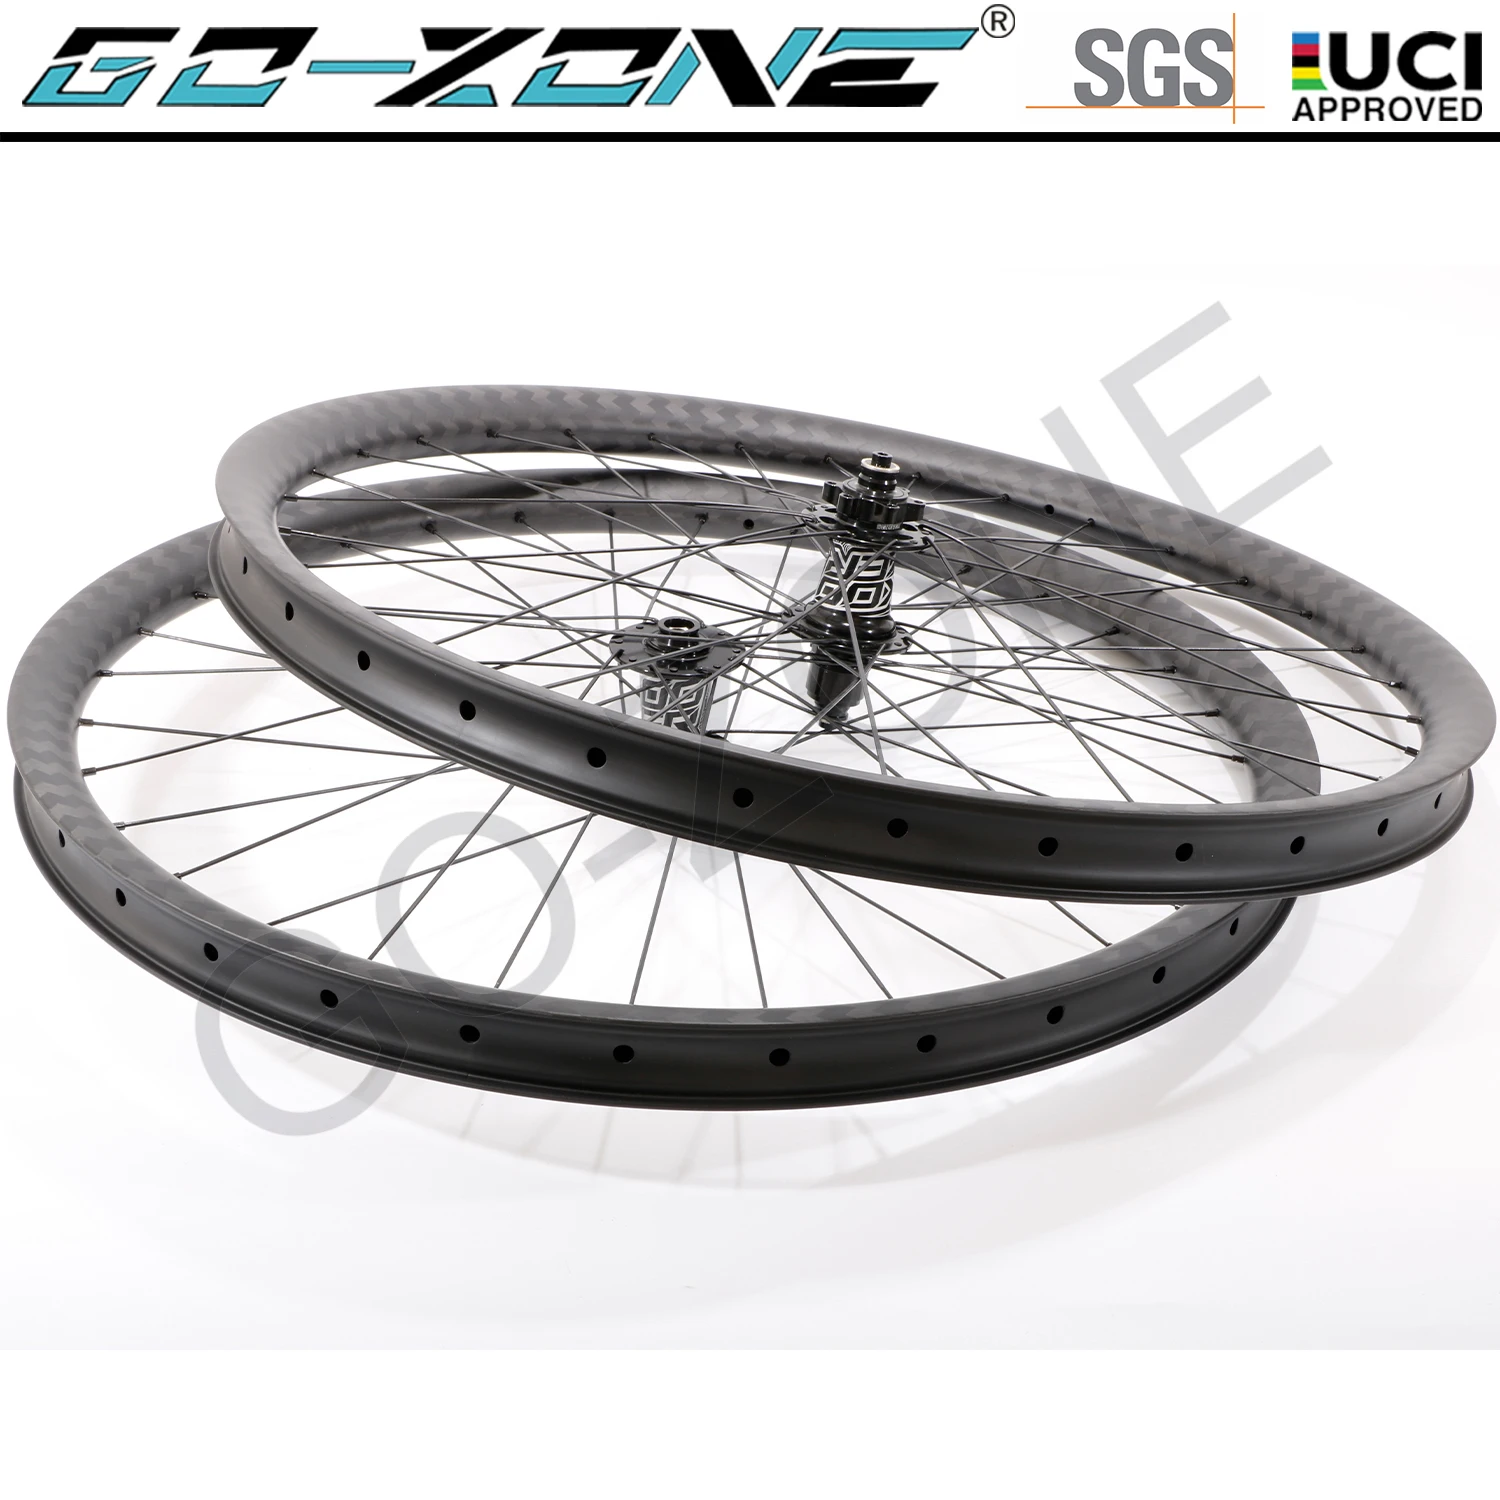 

650B Carbon MTB Bicycle Wheels Light Tubeless XC AM DH Koozer XM490 Thru Axle / Quick Release MTB Wheelset 27.5